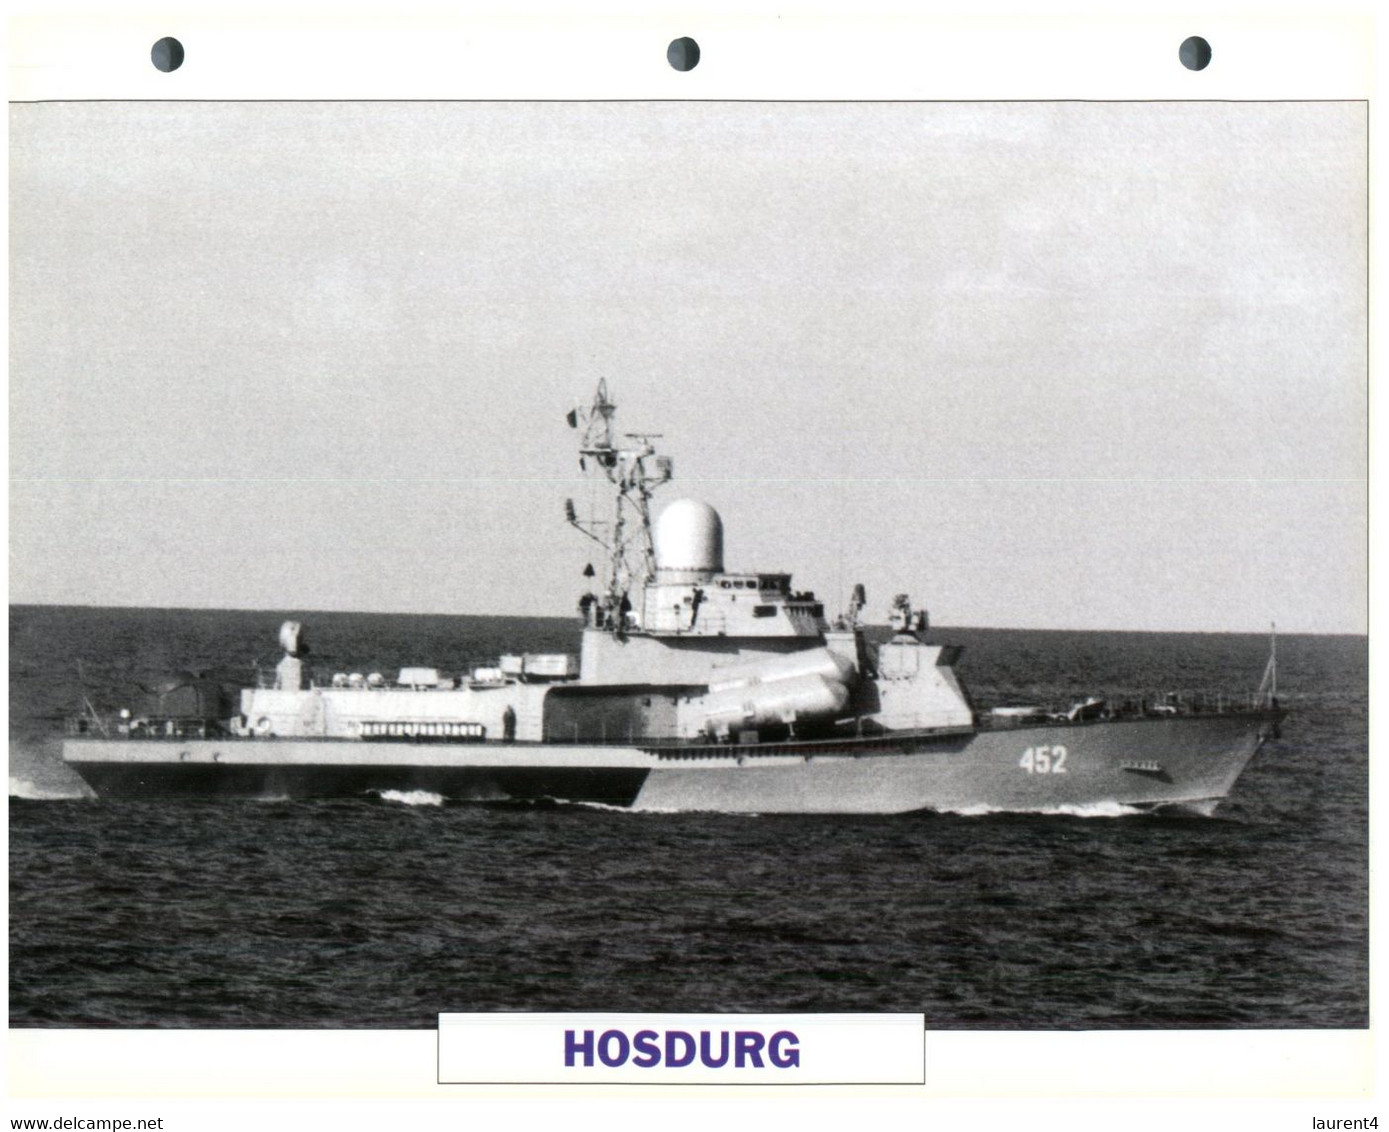 (25 X 19 Cm) (8-9-2021) - T - Photo And Info Sheet On Warship - India Navy - Hosdurg - Bateaux